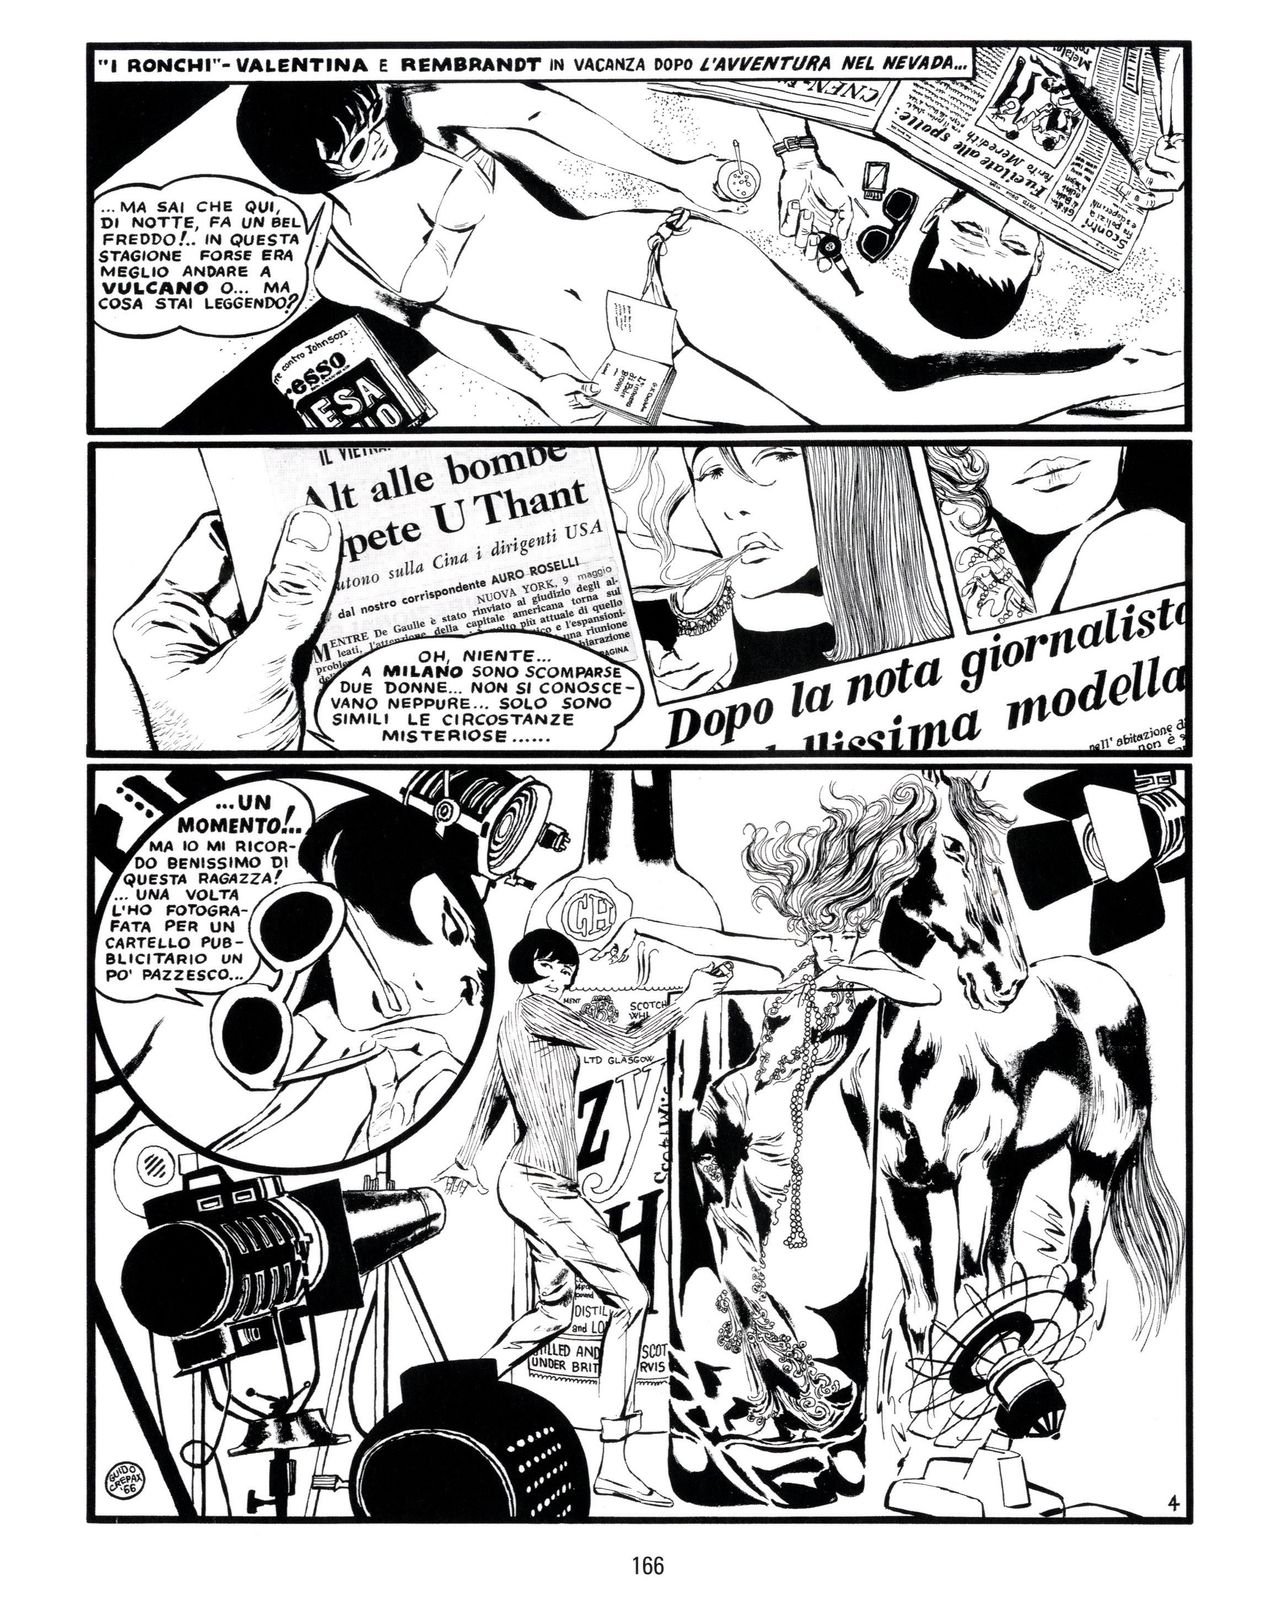 [Guido Crepax] Erotica Fumetti #25 : L'ascesa dei sotterranei : I cavalieri ciechi [Italian] 167